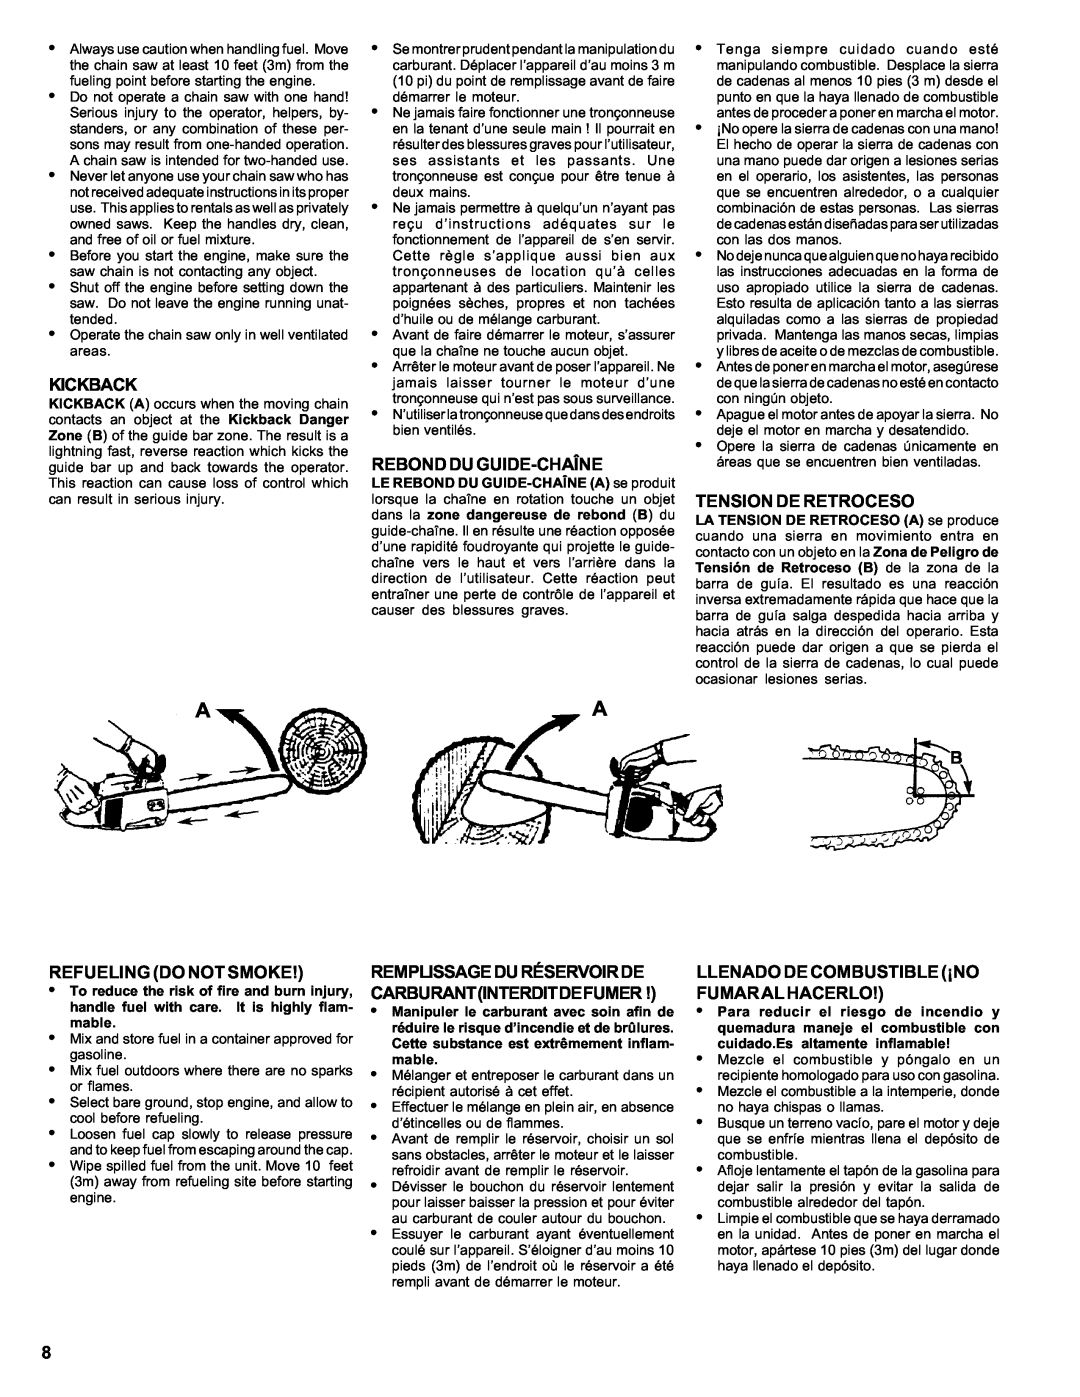 Homelite ut 10910 manual Rebondduguide-Chaîne, Tension De Retroceso, Refueling Do Not Smoke, Kickback 